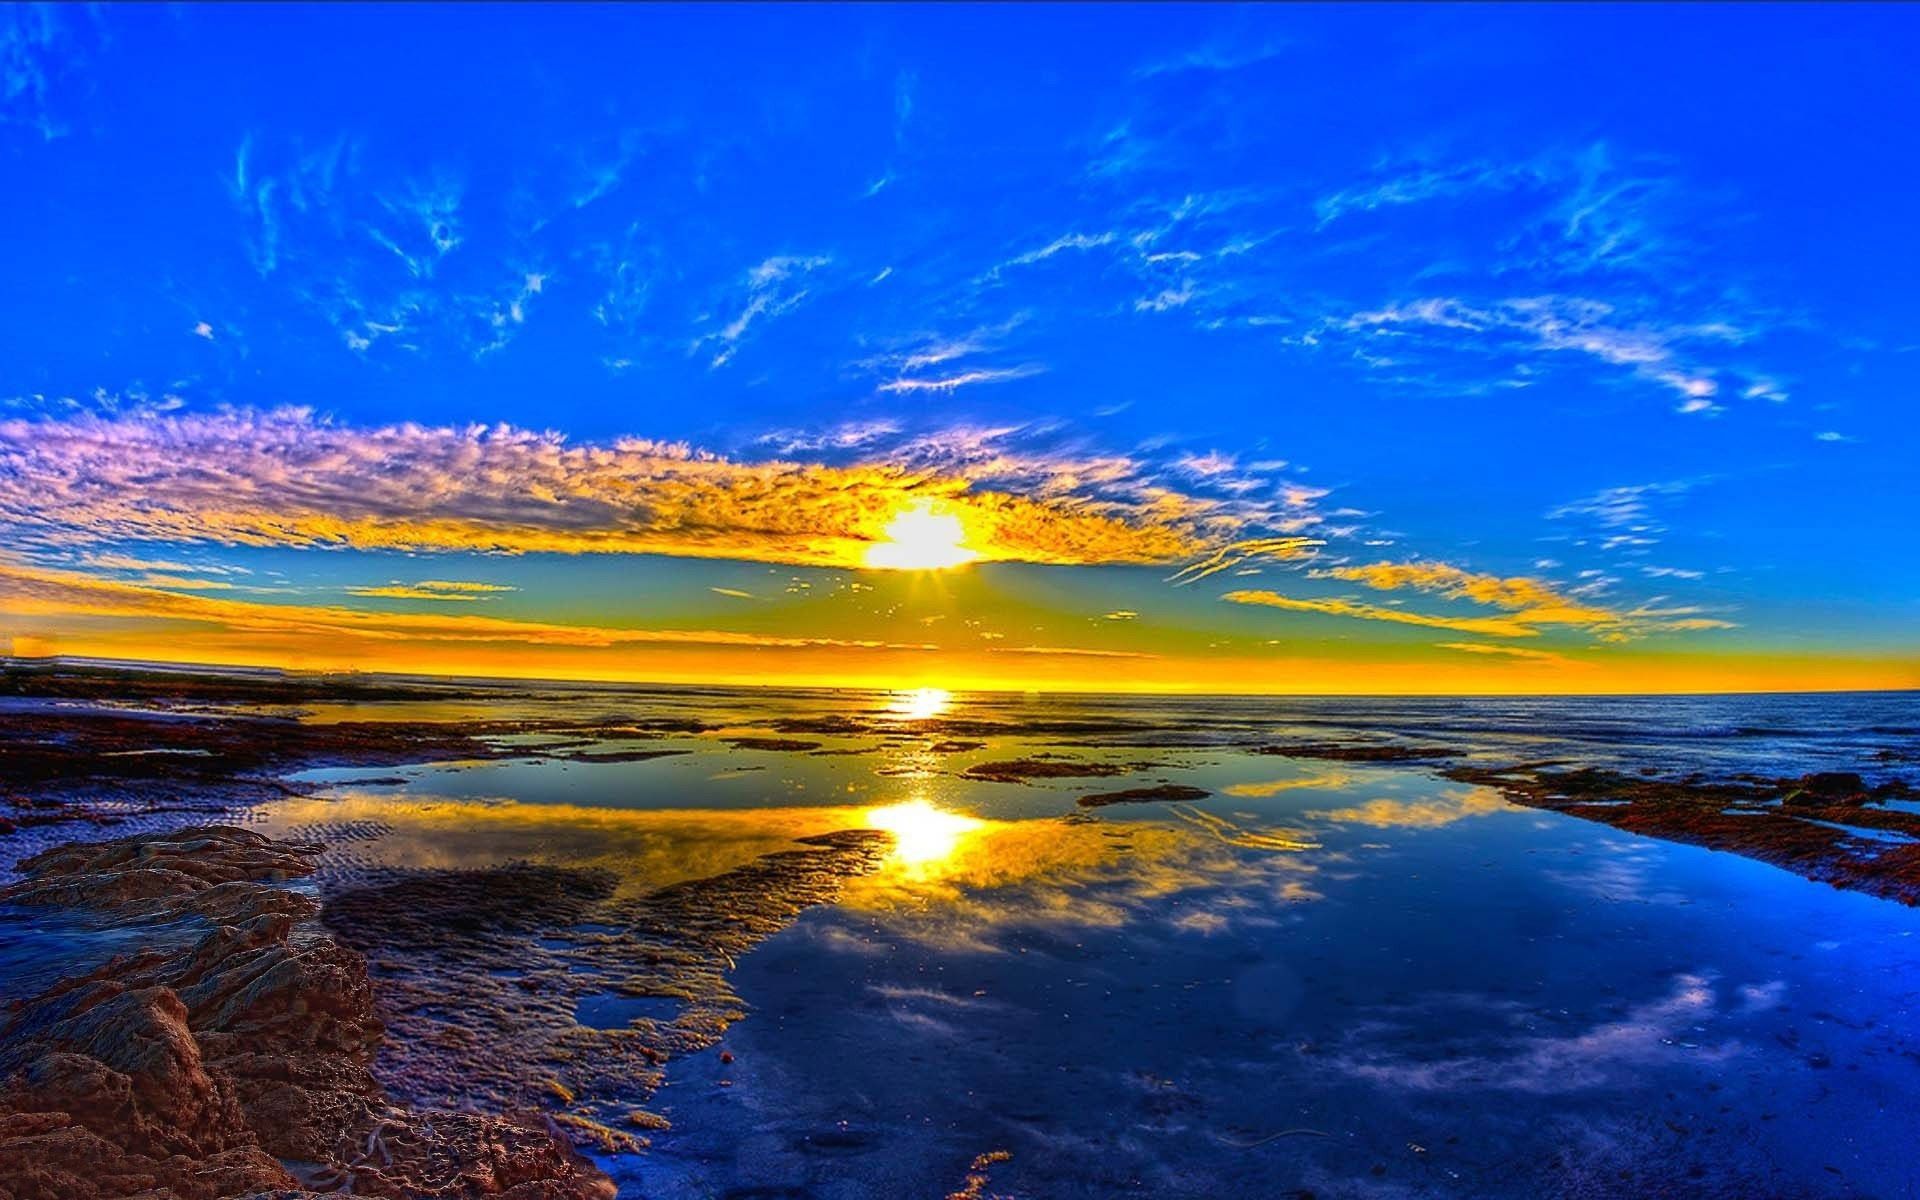 Sunrise High Definition Wallpaper Download Sunrise Images | Cool ...